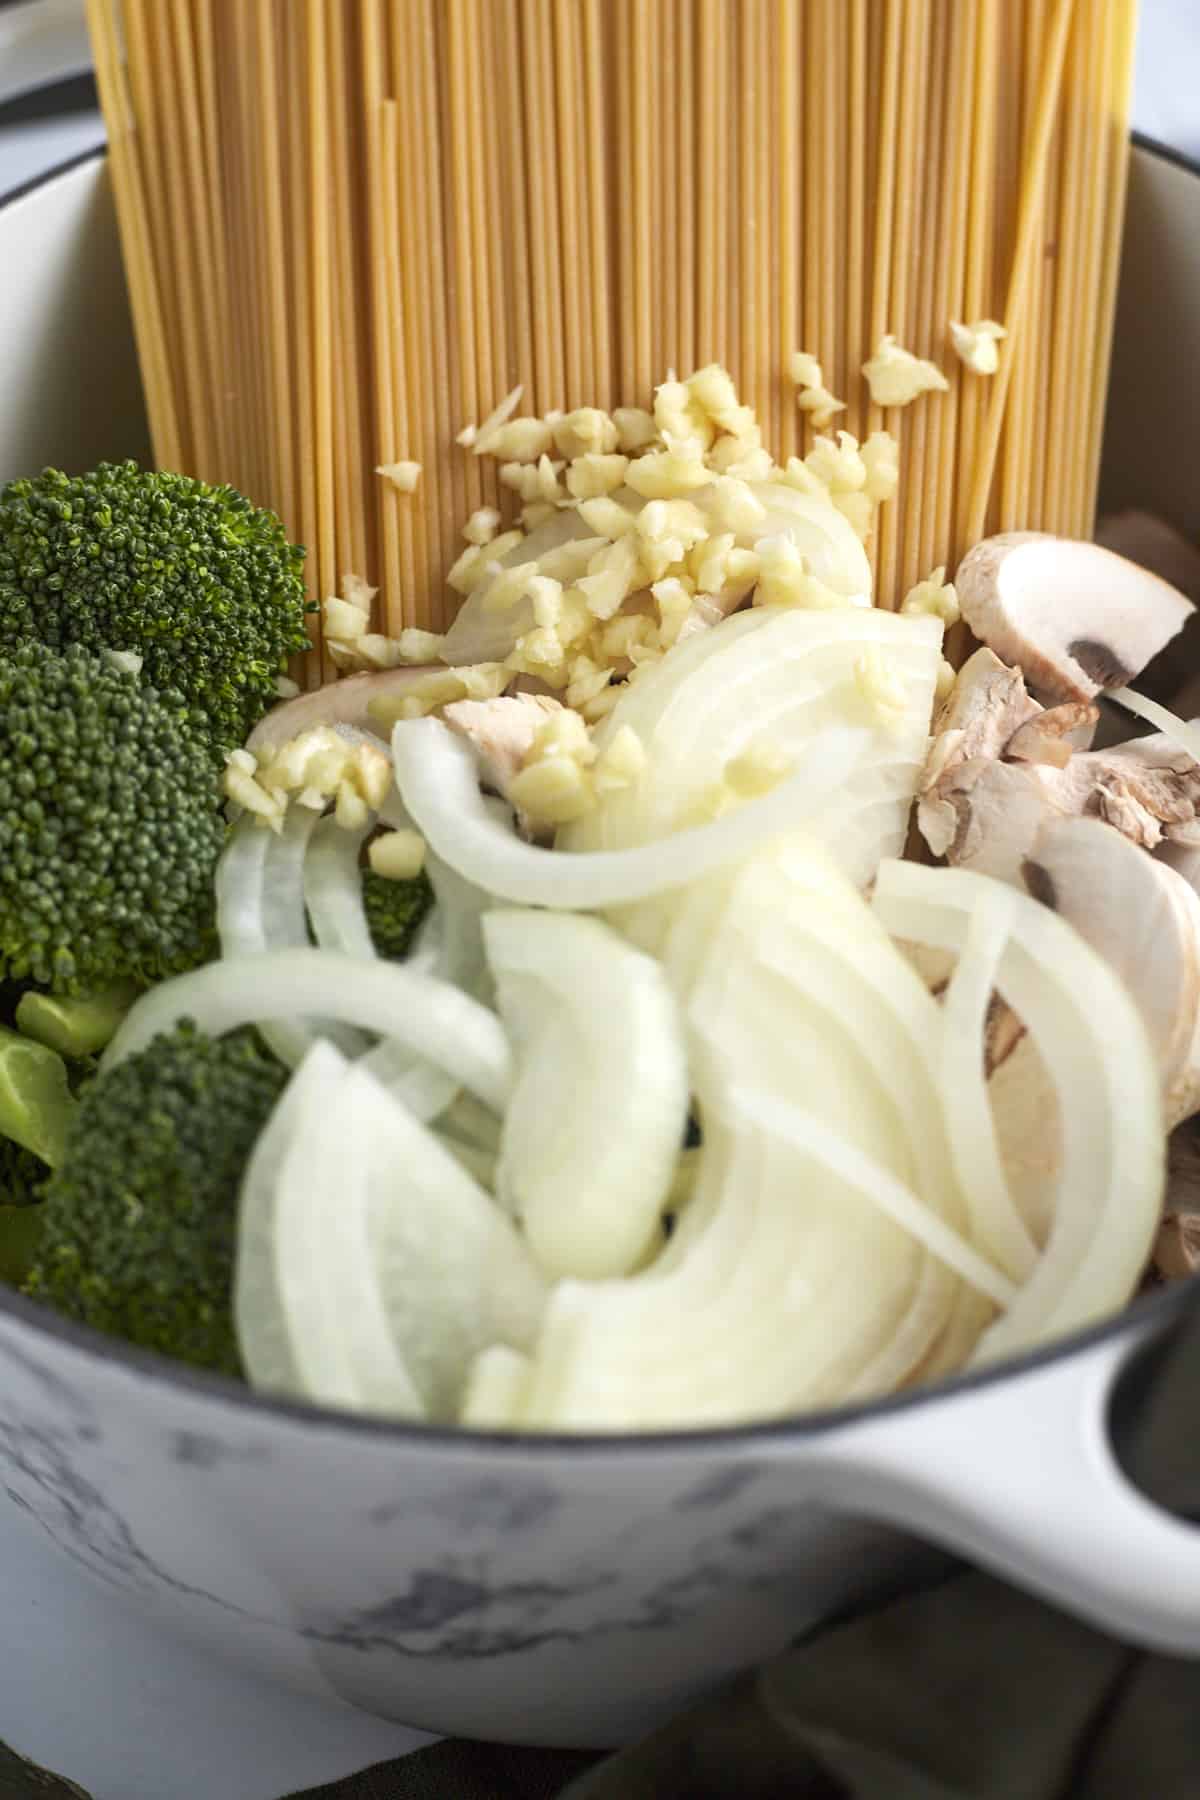 spaghetti noodles, garlic, onions, mushroom, and broccoli in a pot 